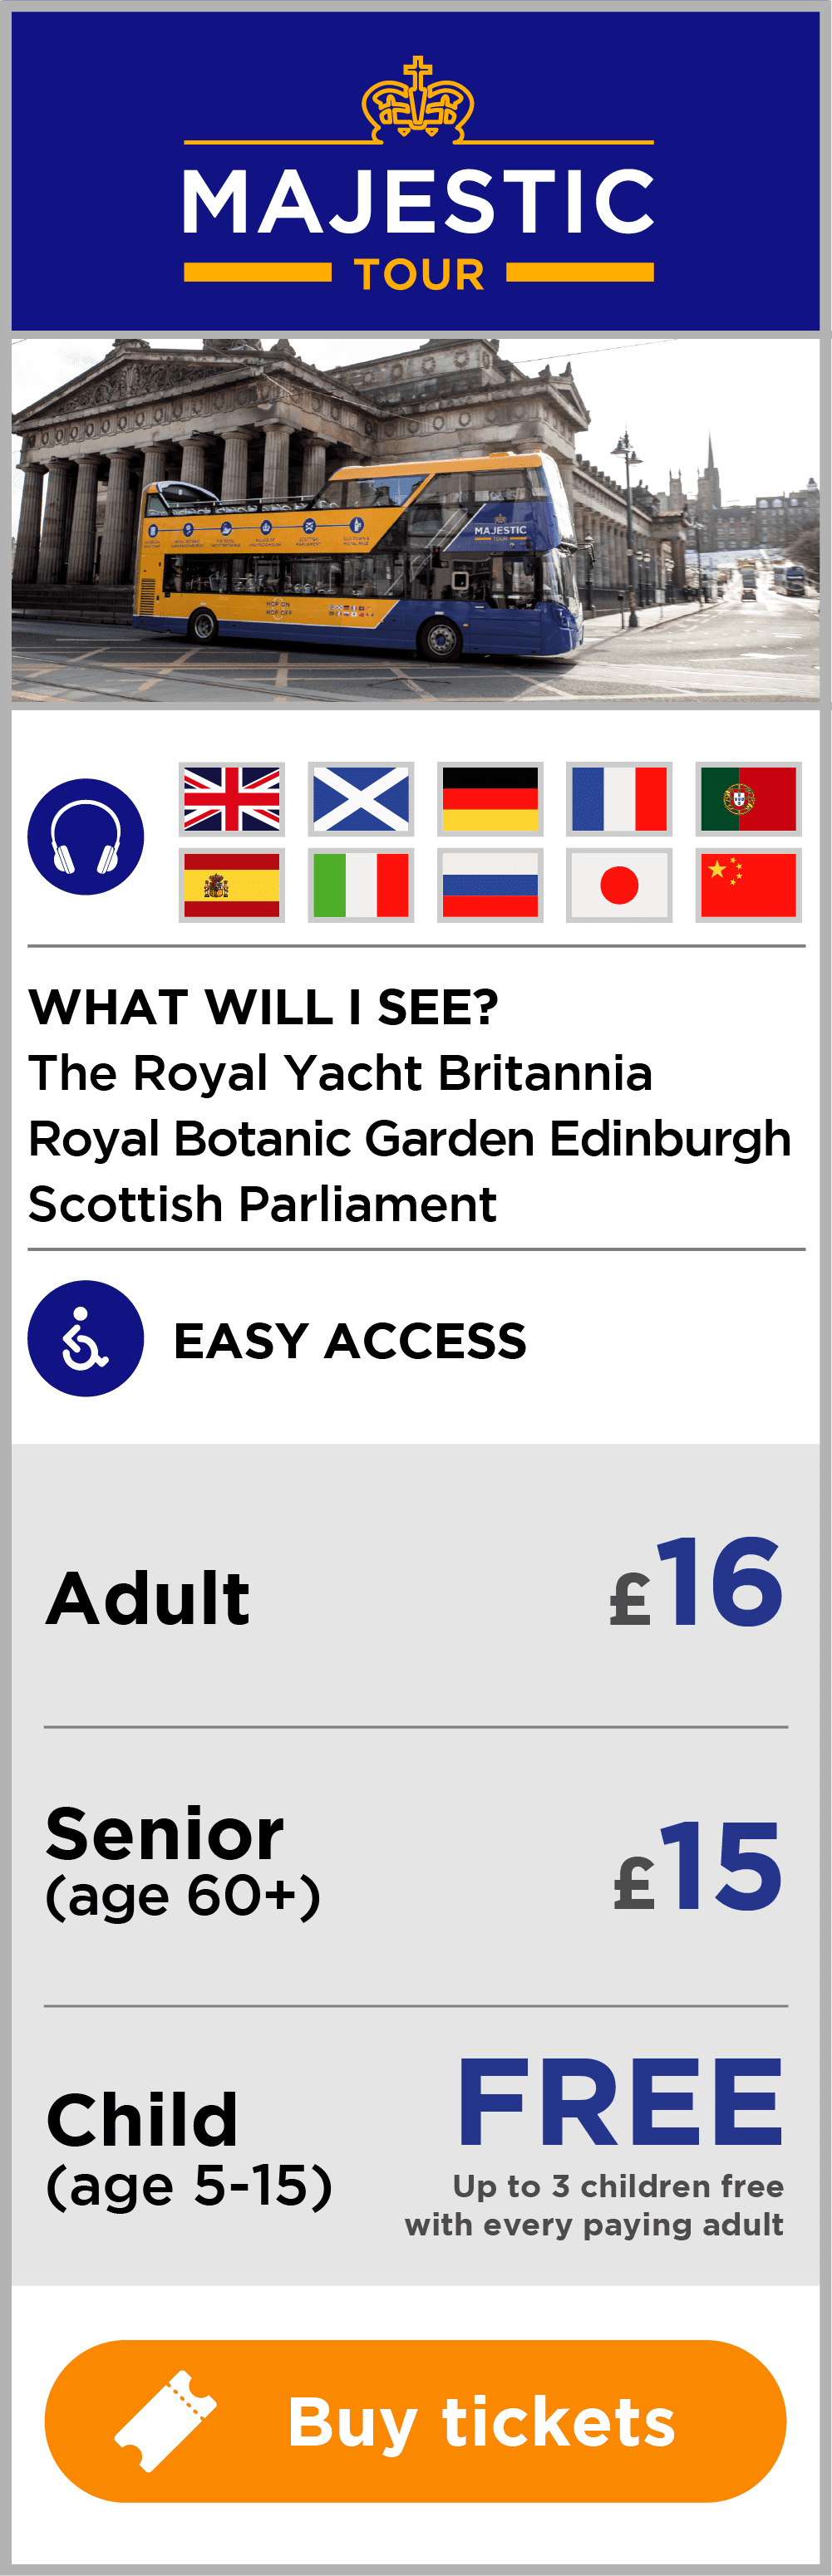 Majestic Tour includes The Royal Yacht Britannia Royal Botanic Garden Edinburgh Scottish Parliament. £16 adult and £15 senior ticket.